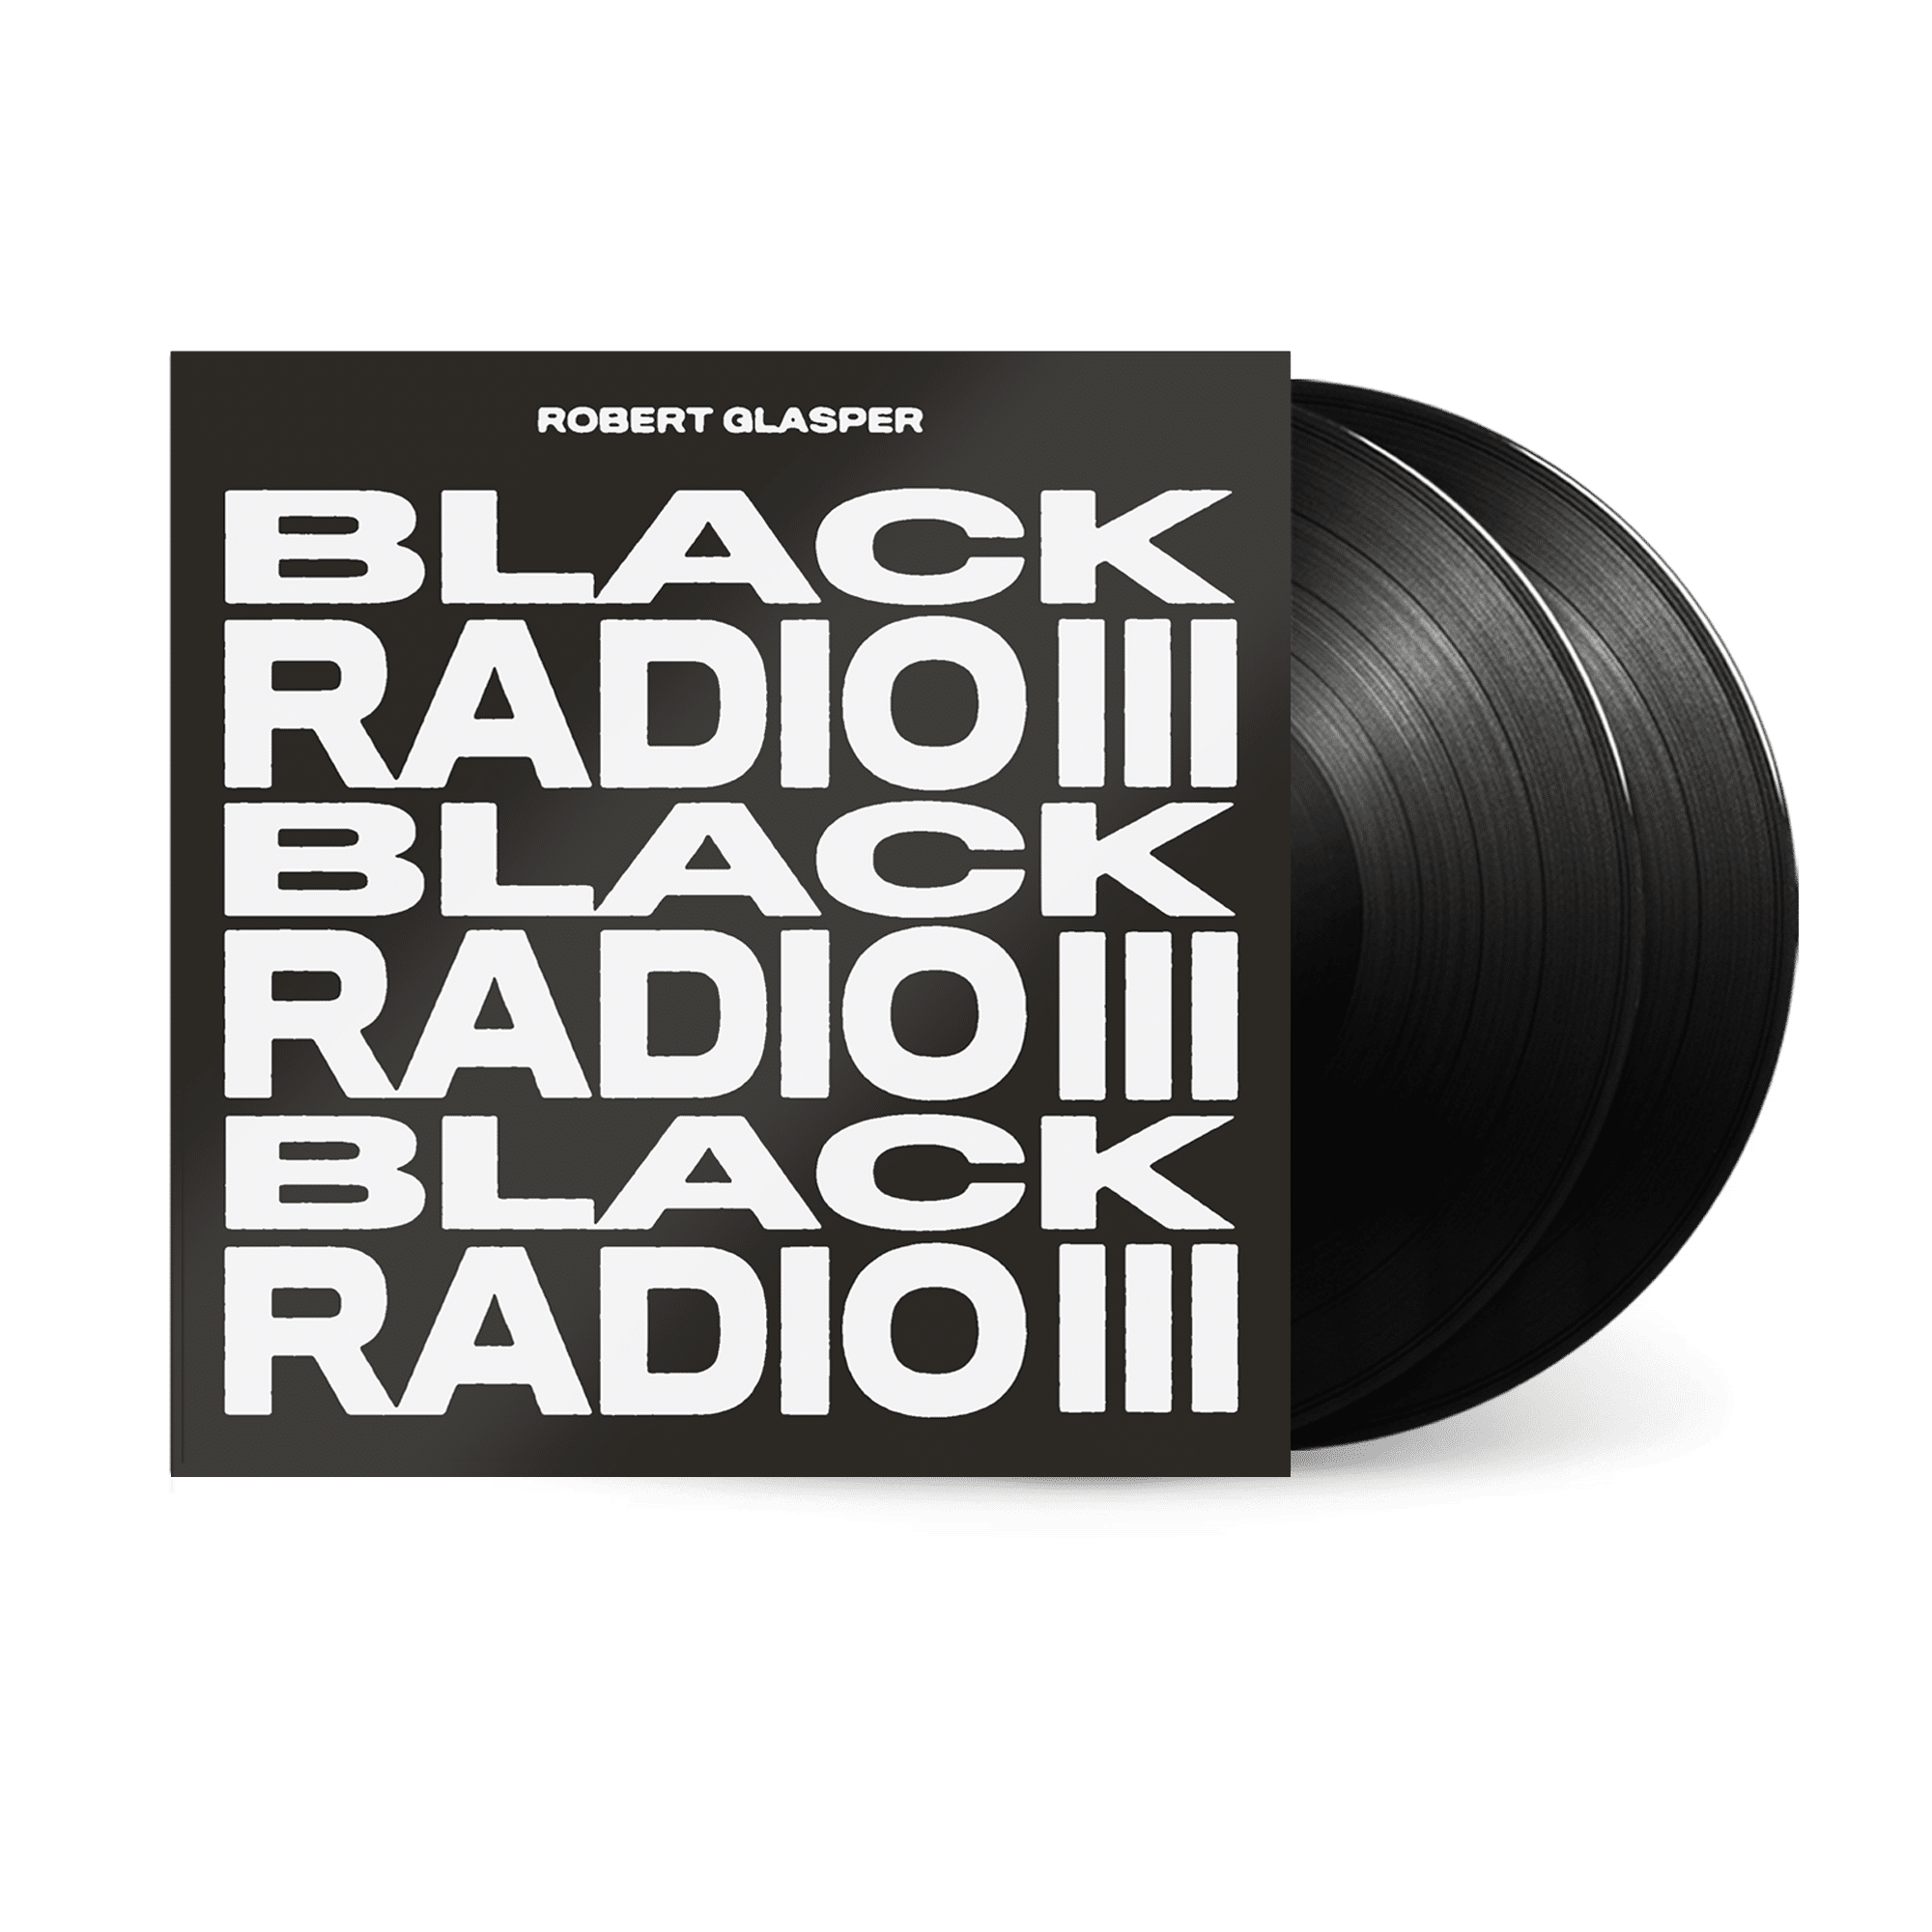 ROBERT GLASPER - BLACK RADIO III